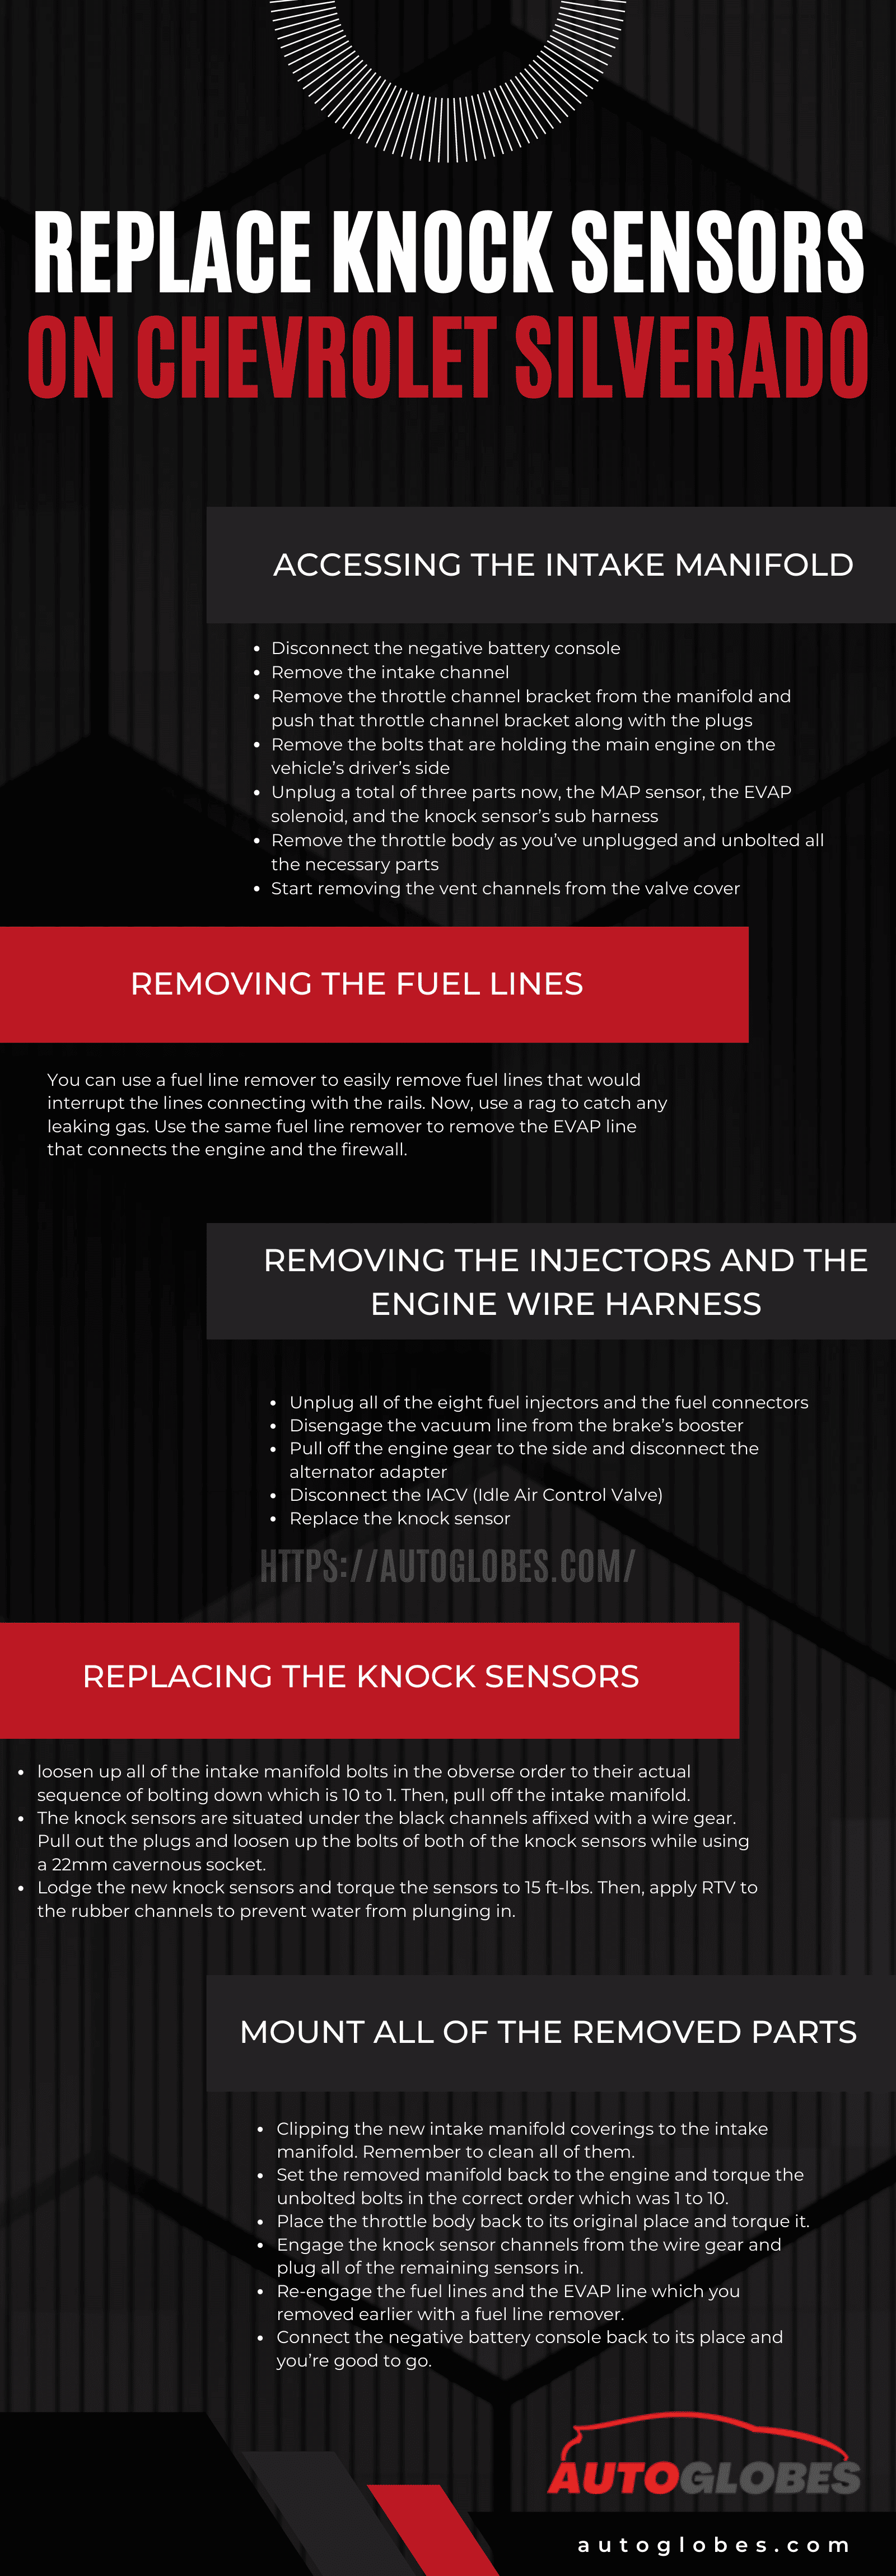 Replace Knock Sensors On Chevrolet Silverado infographic